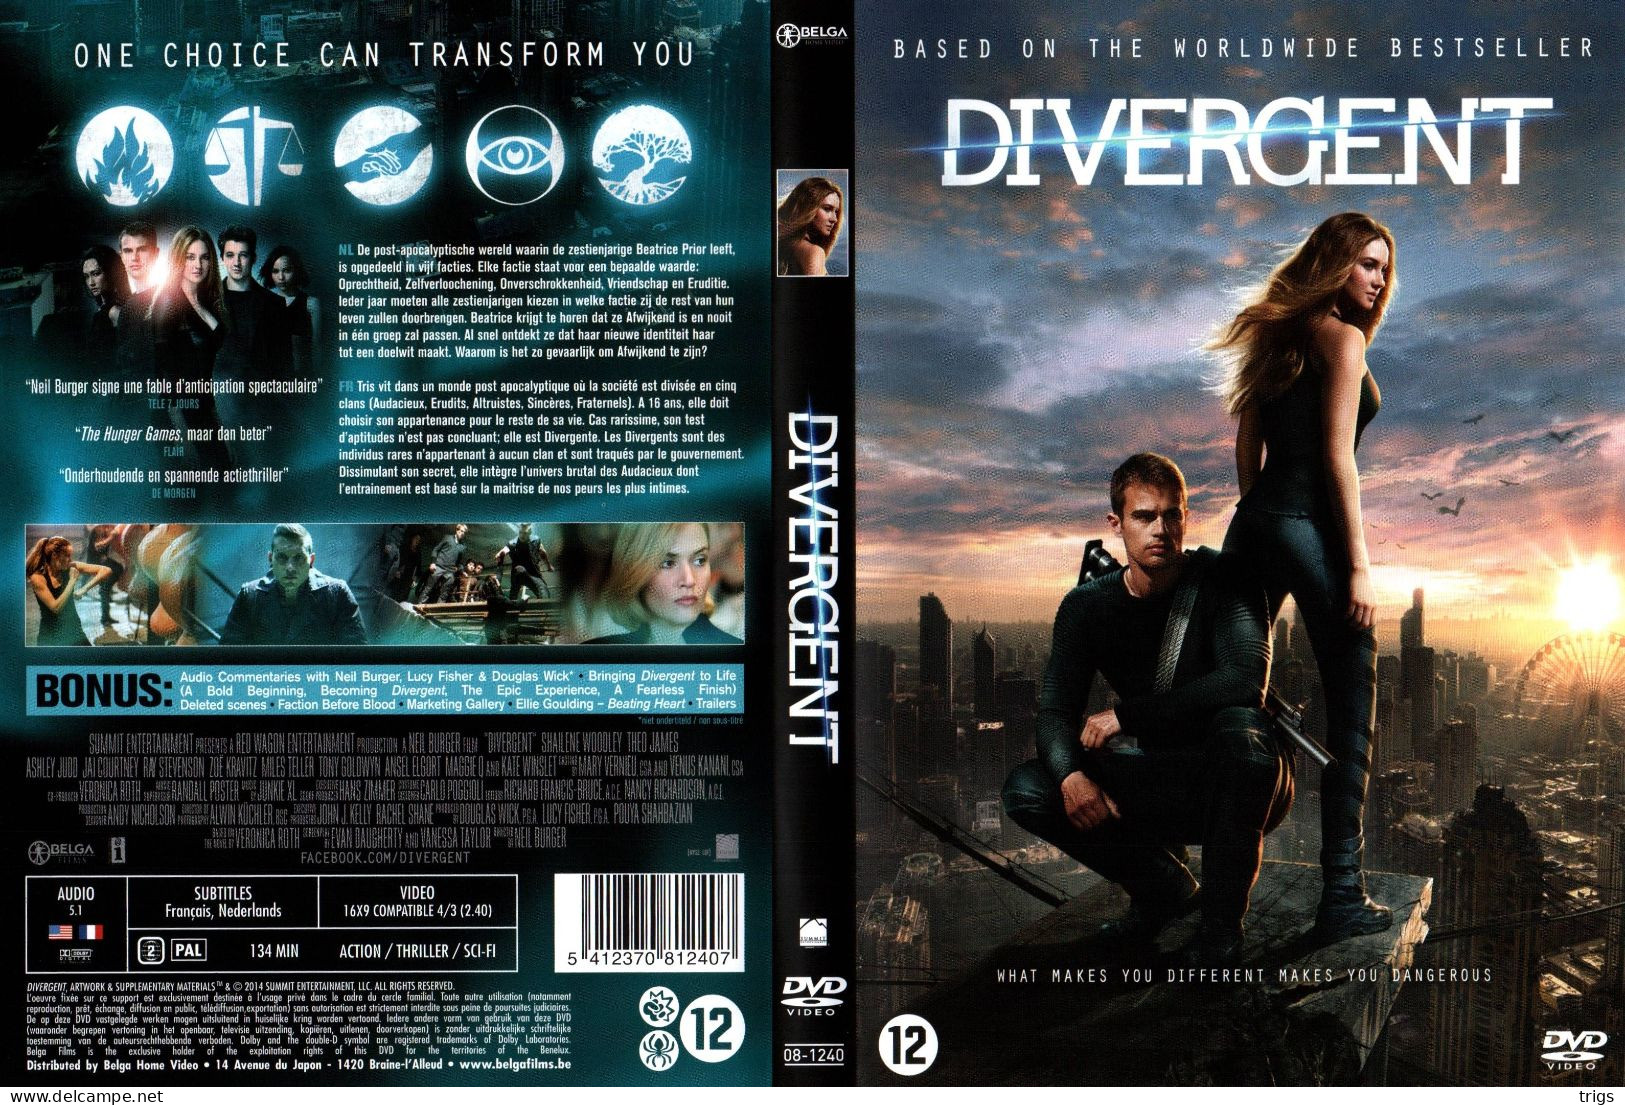 DVD - Divergent - Action, Adventure